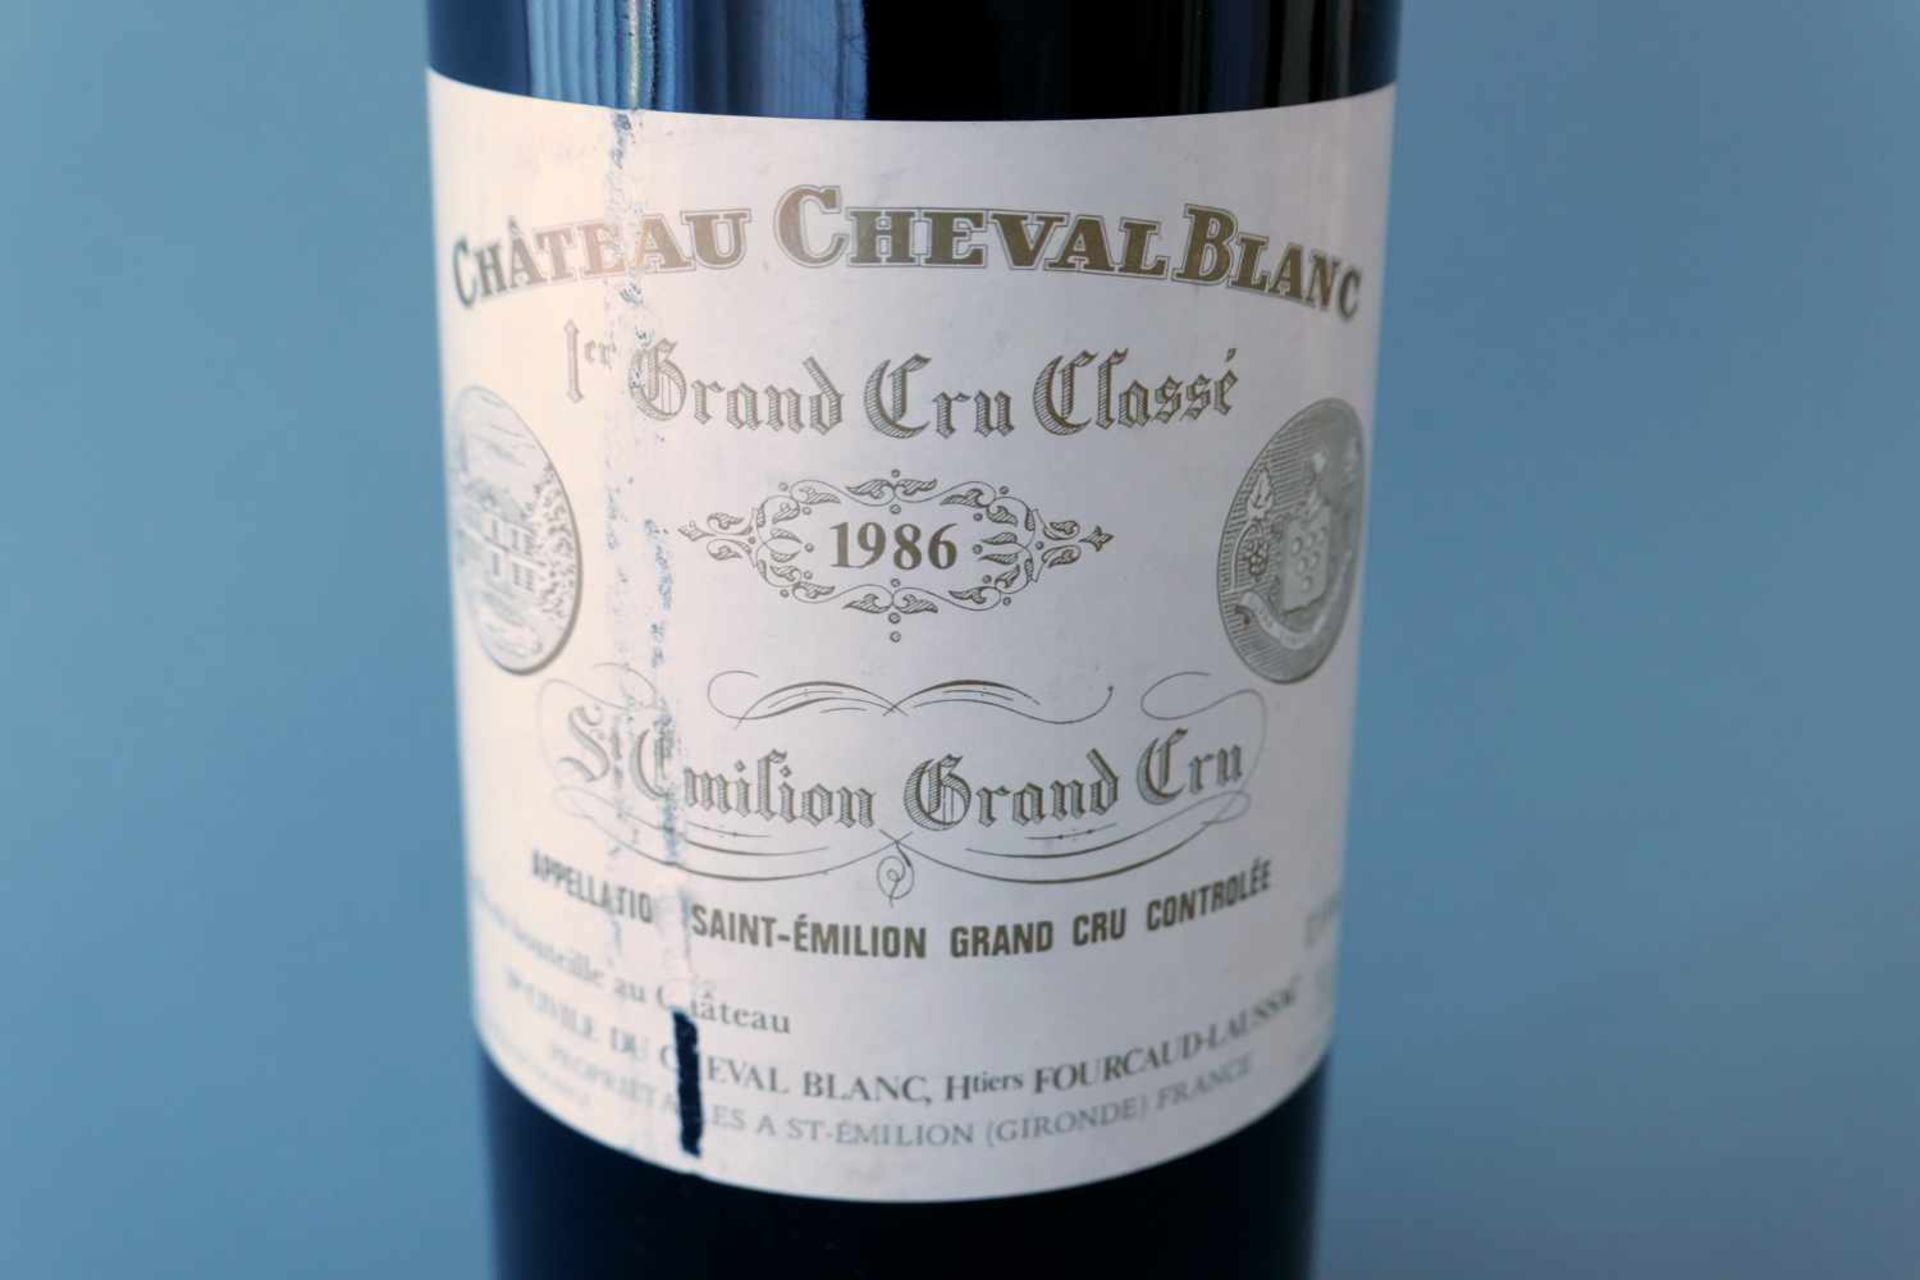 Chateau Cheval BlancGrand Cru Classé, Jahrgang 1986, Inhalt 1500 ml. Saint-Émilion, Bordelais, - Image 2 of 2